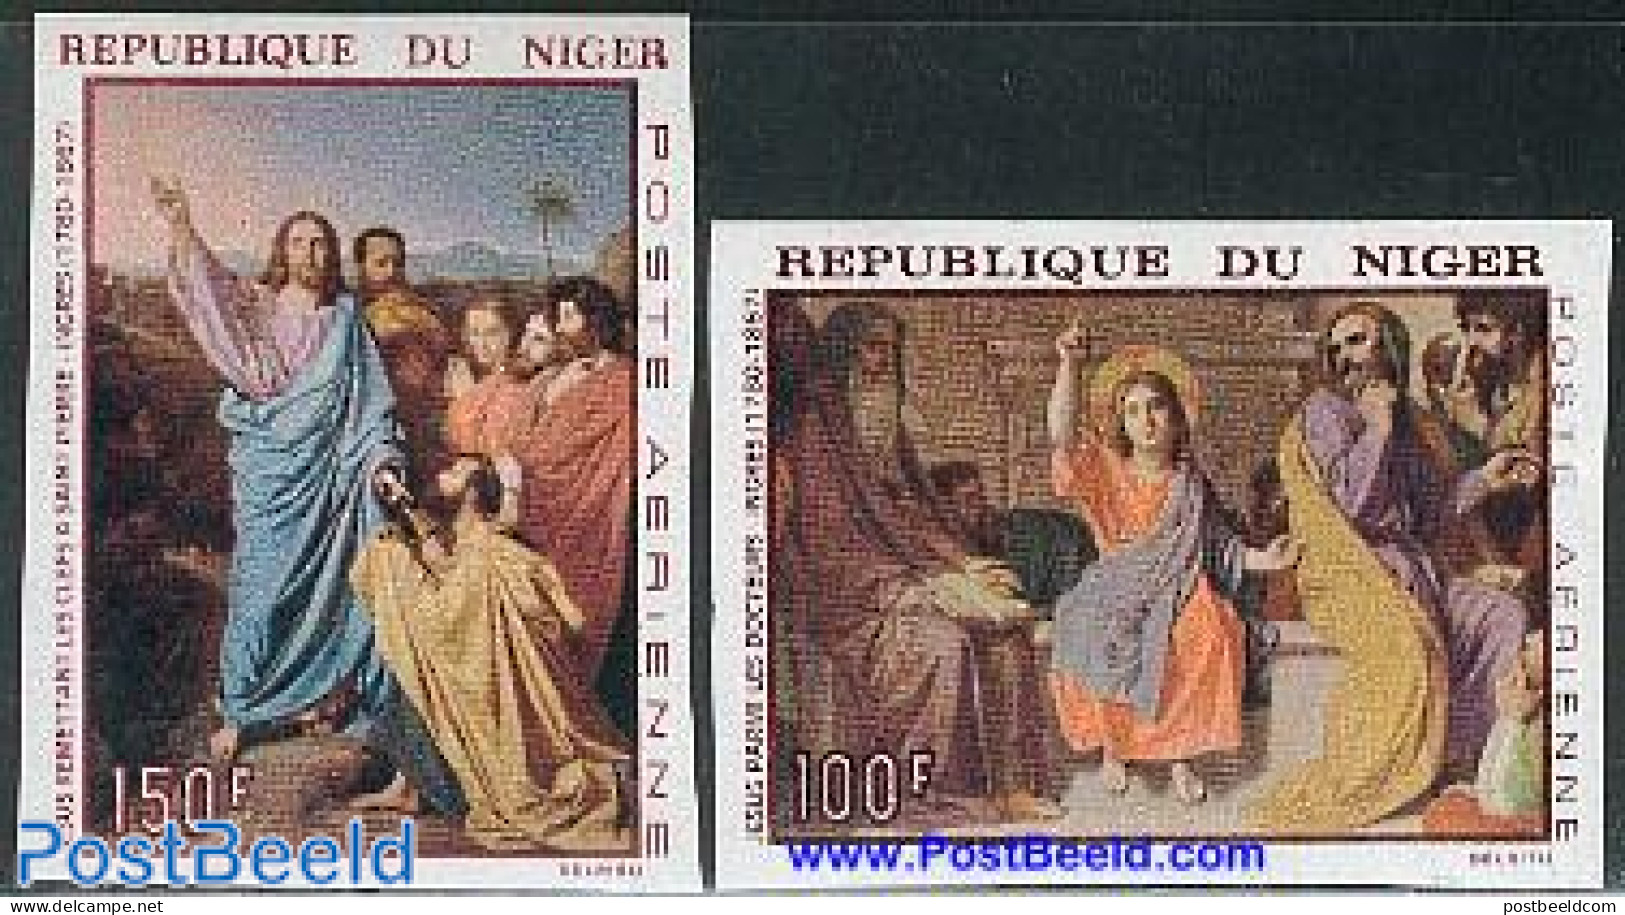 Niger 1967 INGRES PAINTINGS 2V IMPER, Mint NH, Paintings - Niger (1960-...)